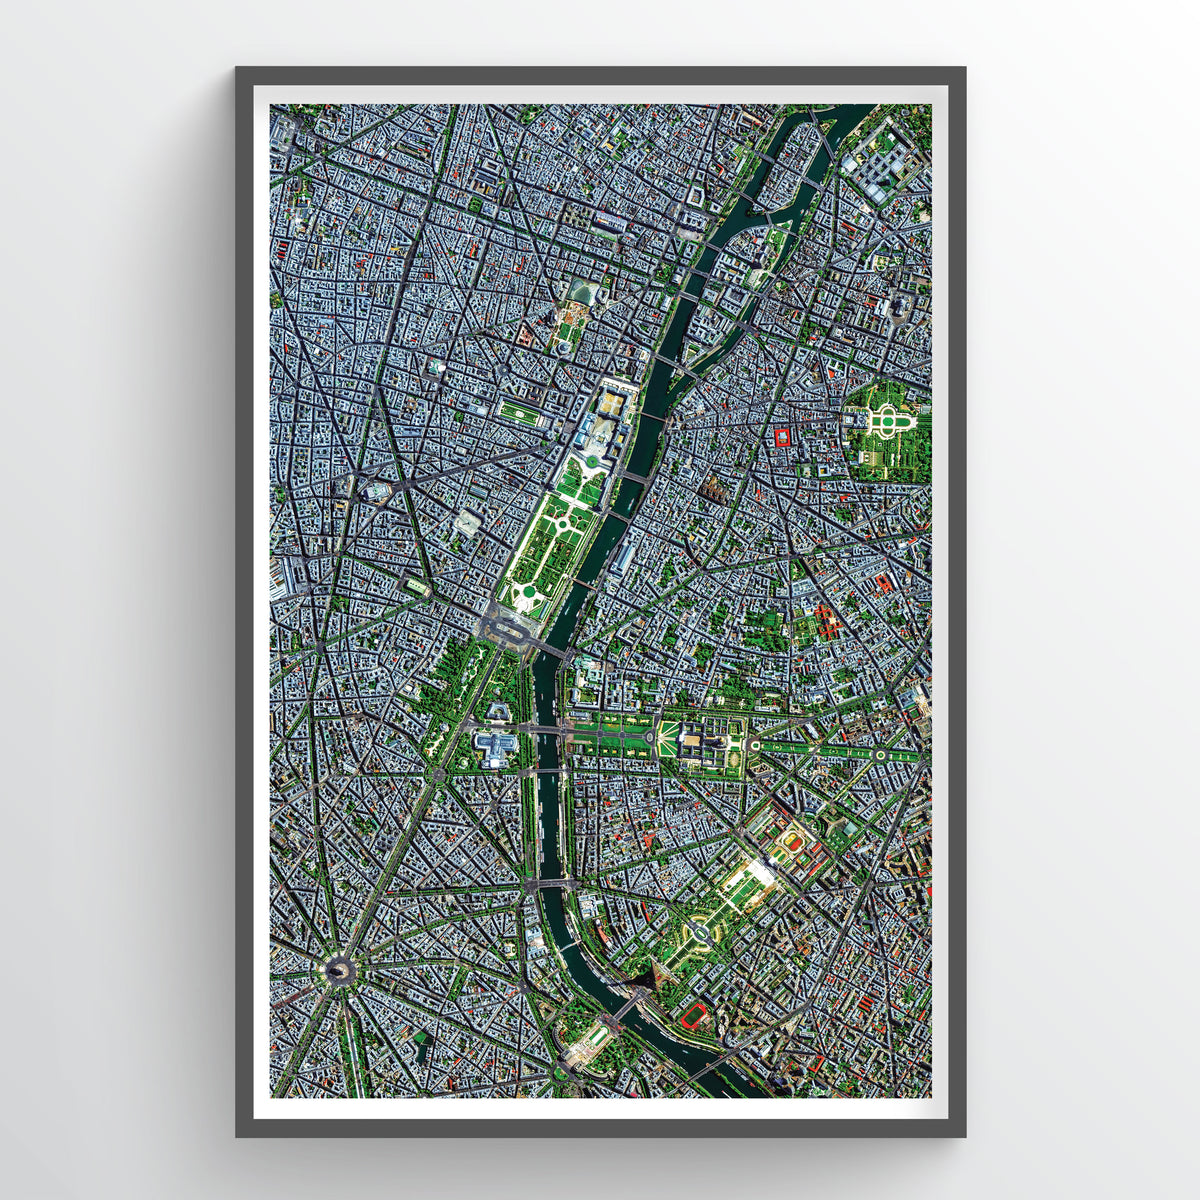 Paris Earth Photography - Art Print